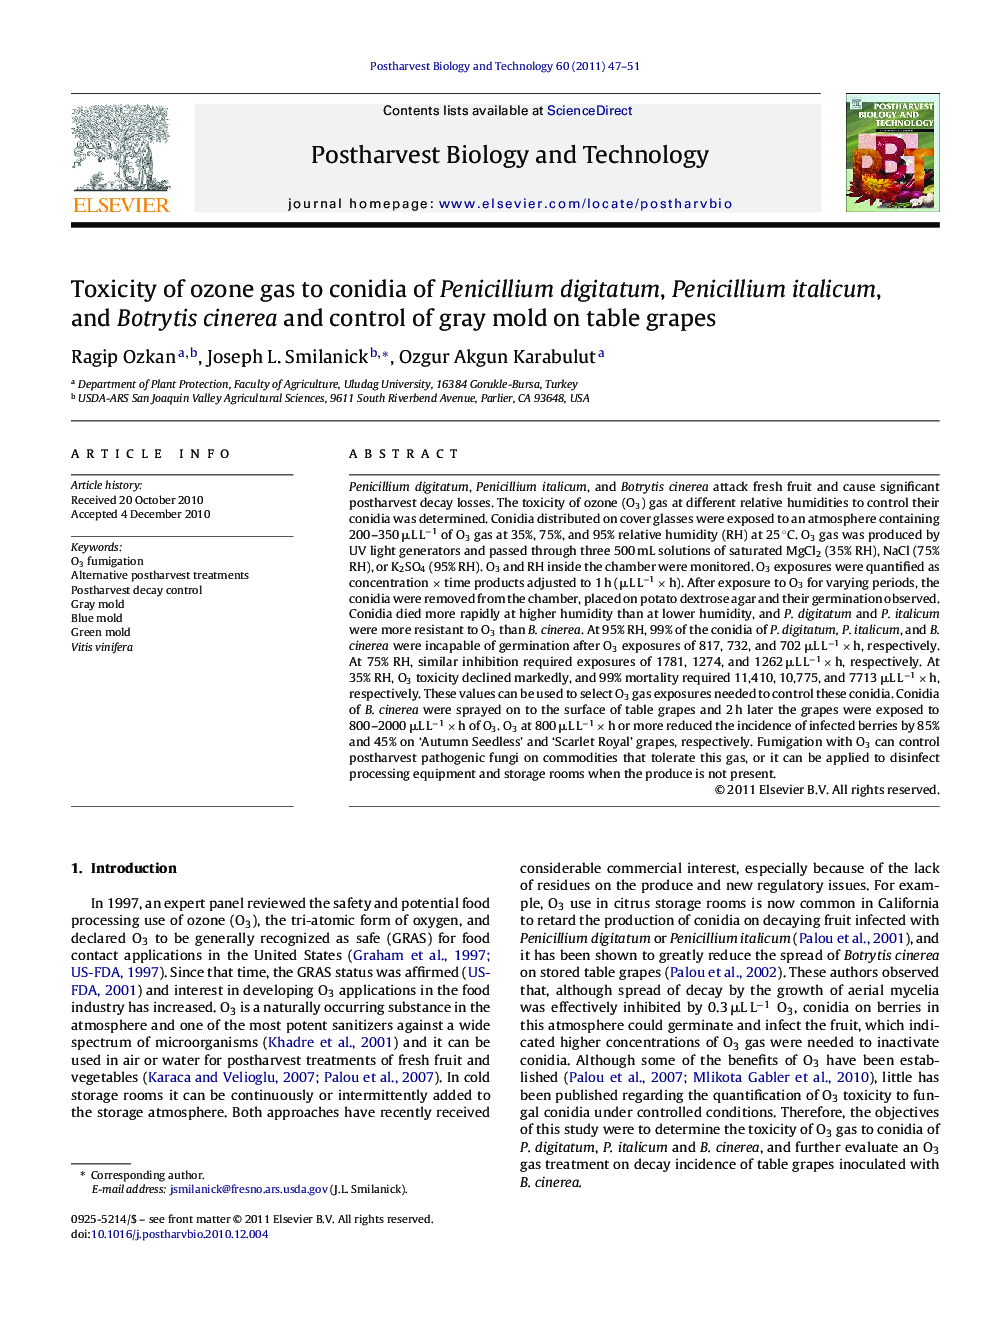 Toxicity of ozone gas to conidia of Penicillium digitatum, Penicillium italicum, and Botrytis cinerea and control of gray mold on table grapes